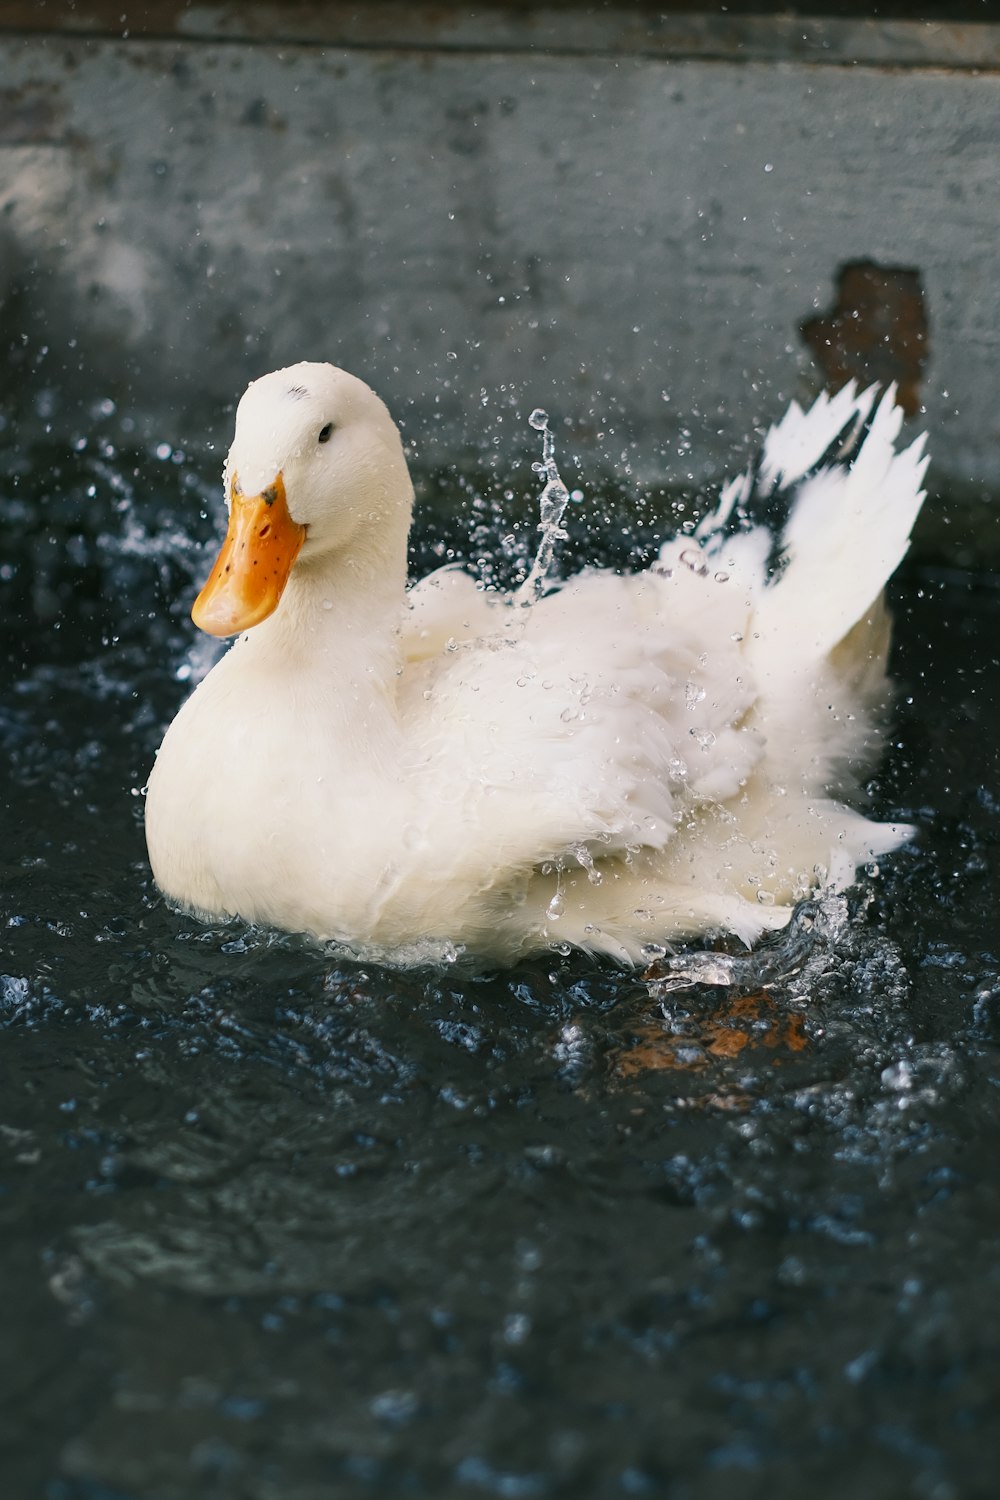 a white duck splashing water in a pond